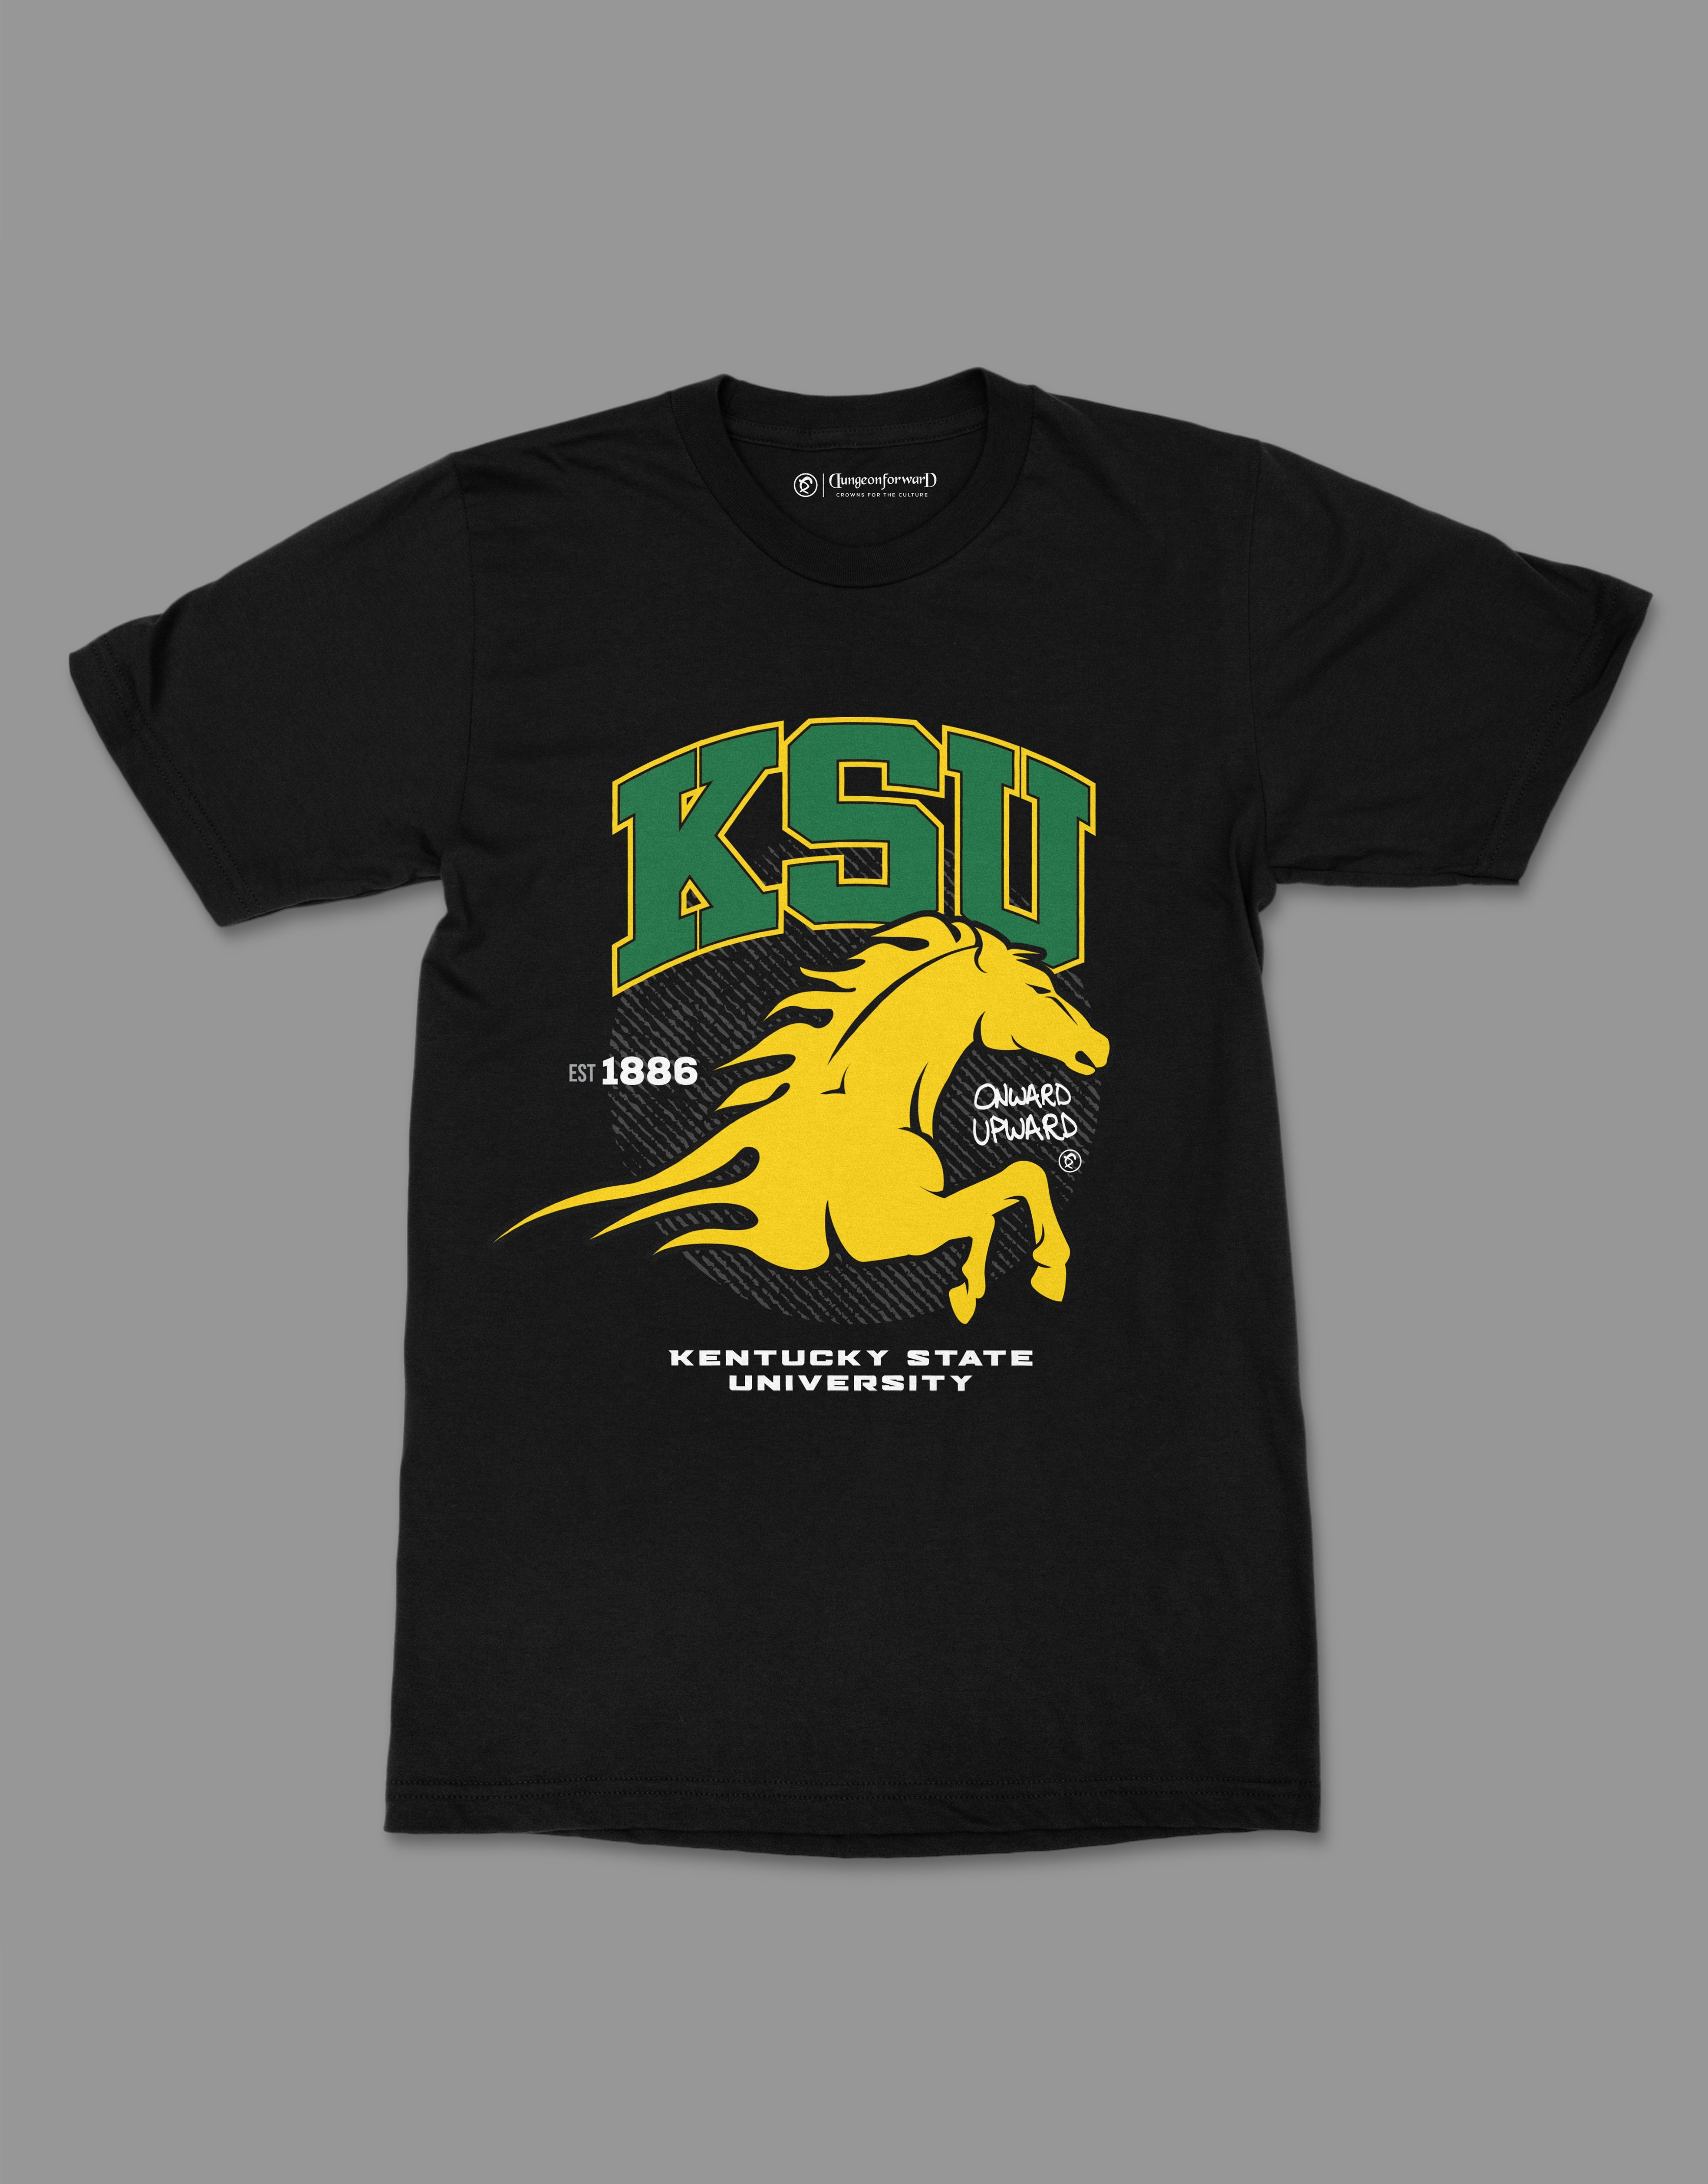 The Yard Essentials - Kentucky State University - KSU Tshirt